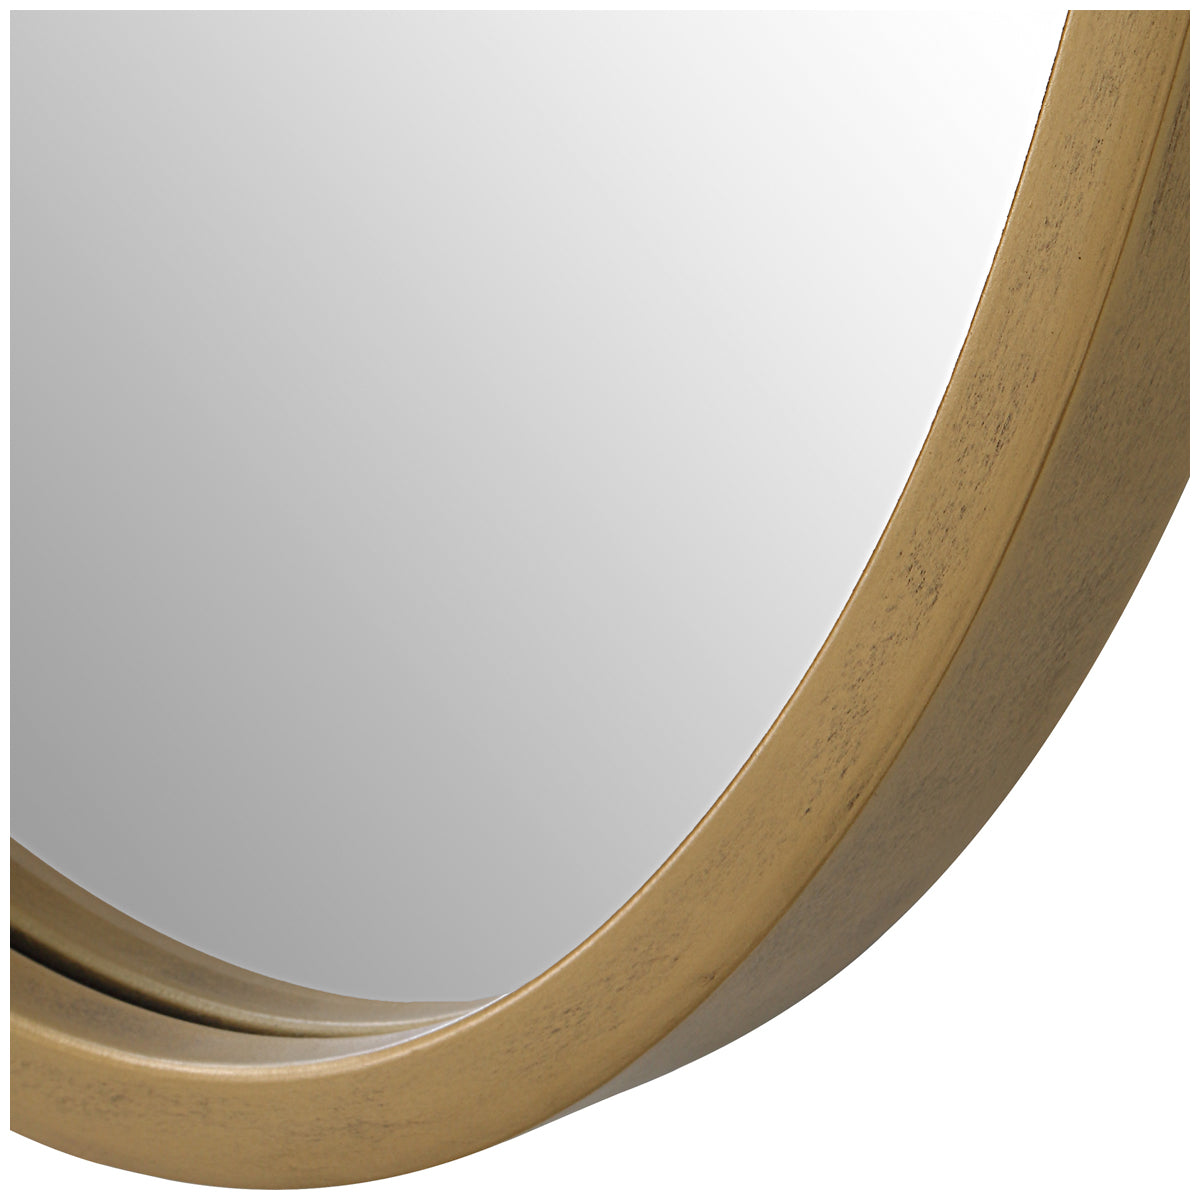 Uttermost Boomerang Gold Mirror